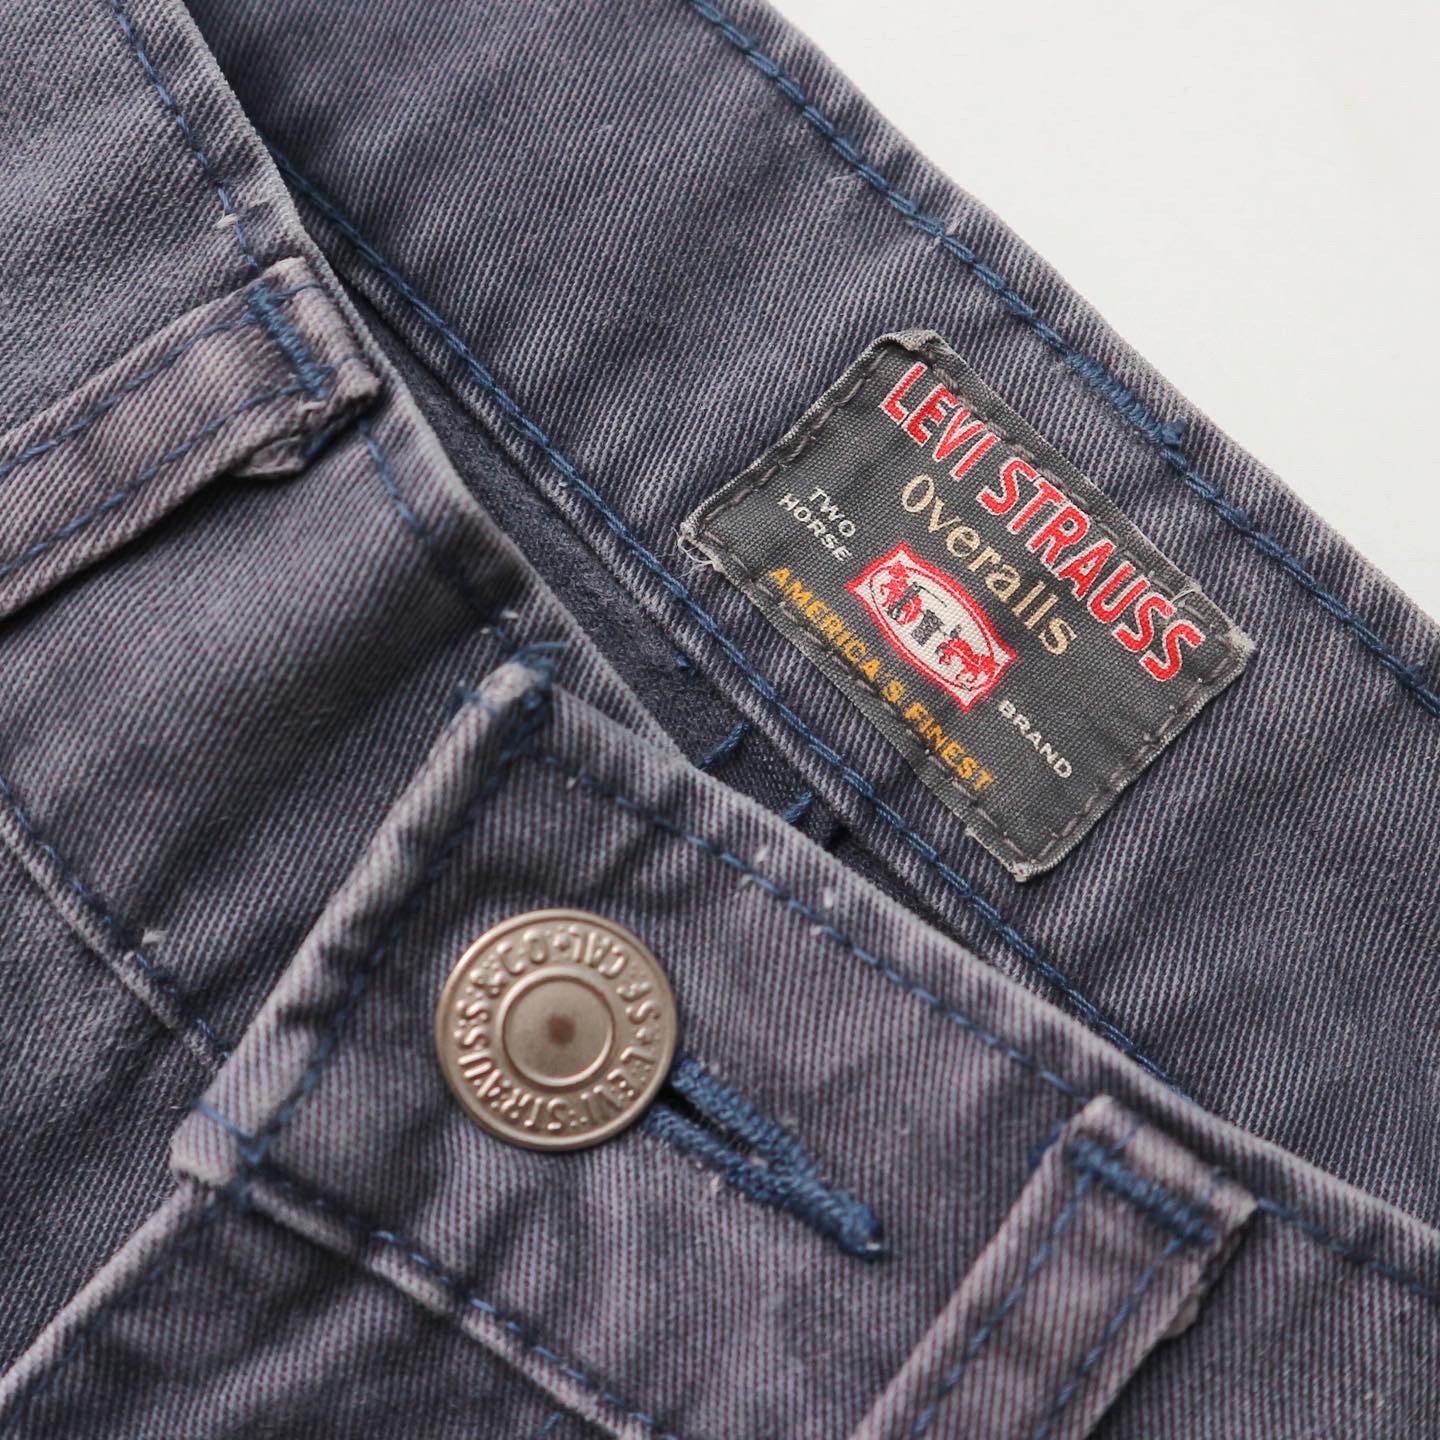 Vintage 90s Levi's Jeans denimister